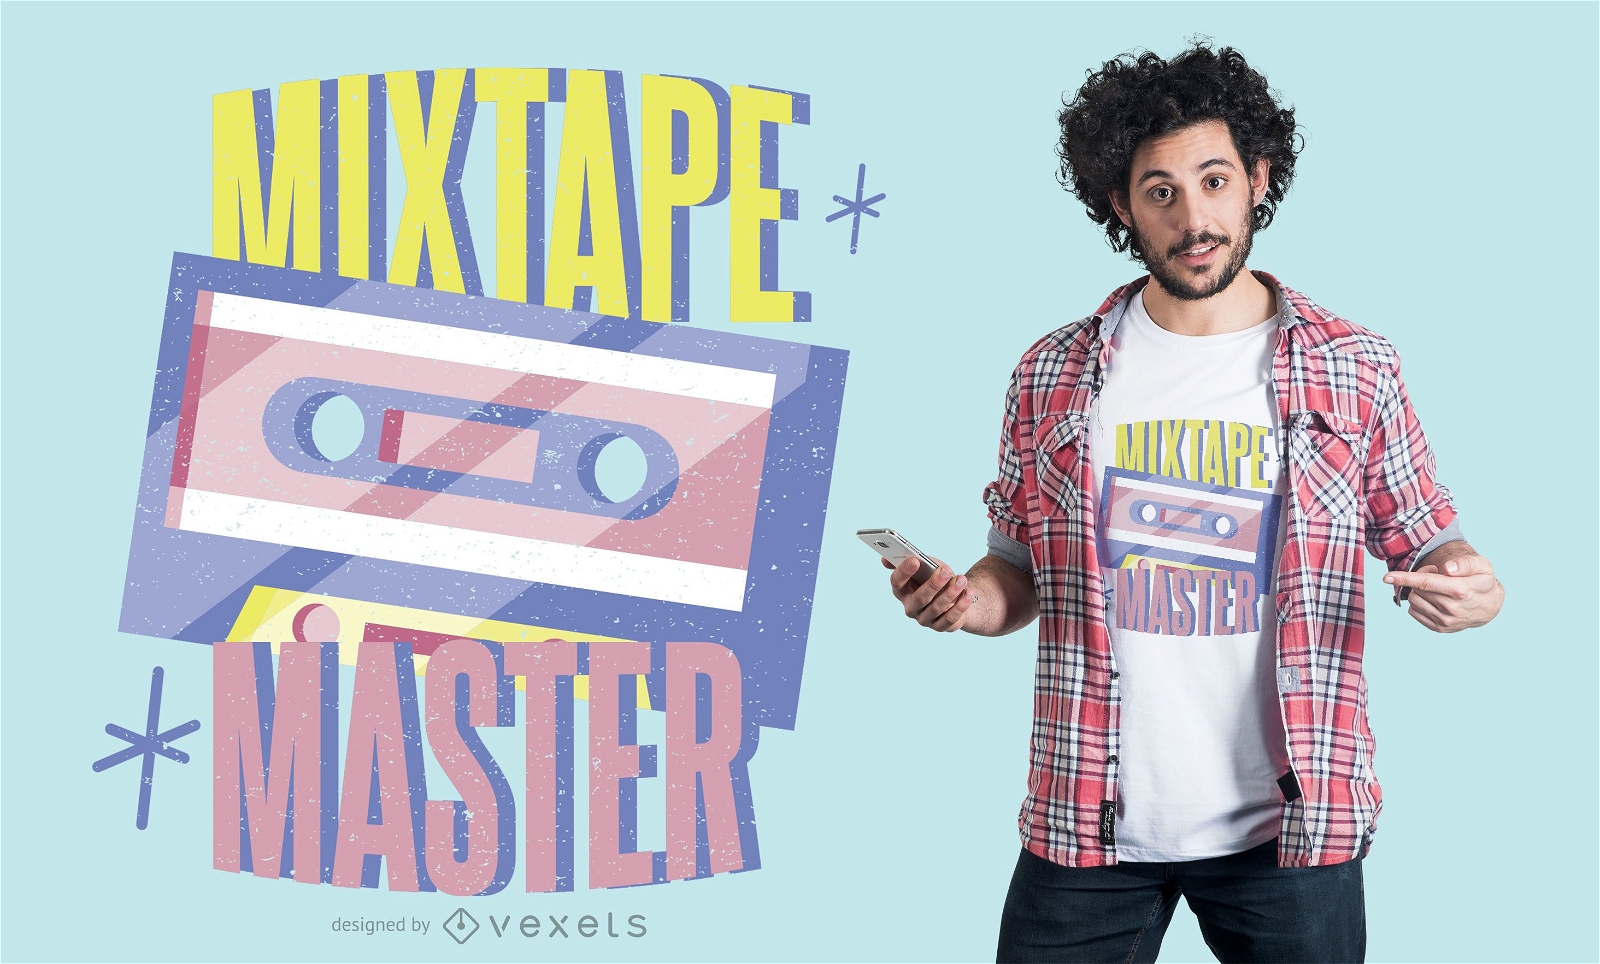 Mixtape master t-shirt design